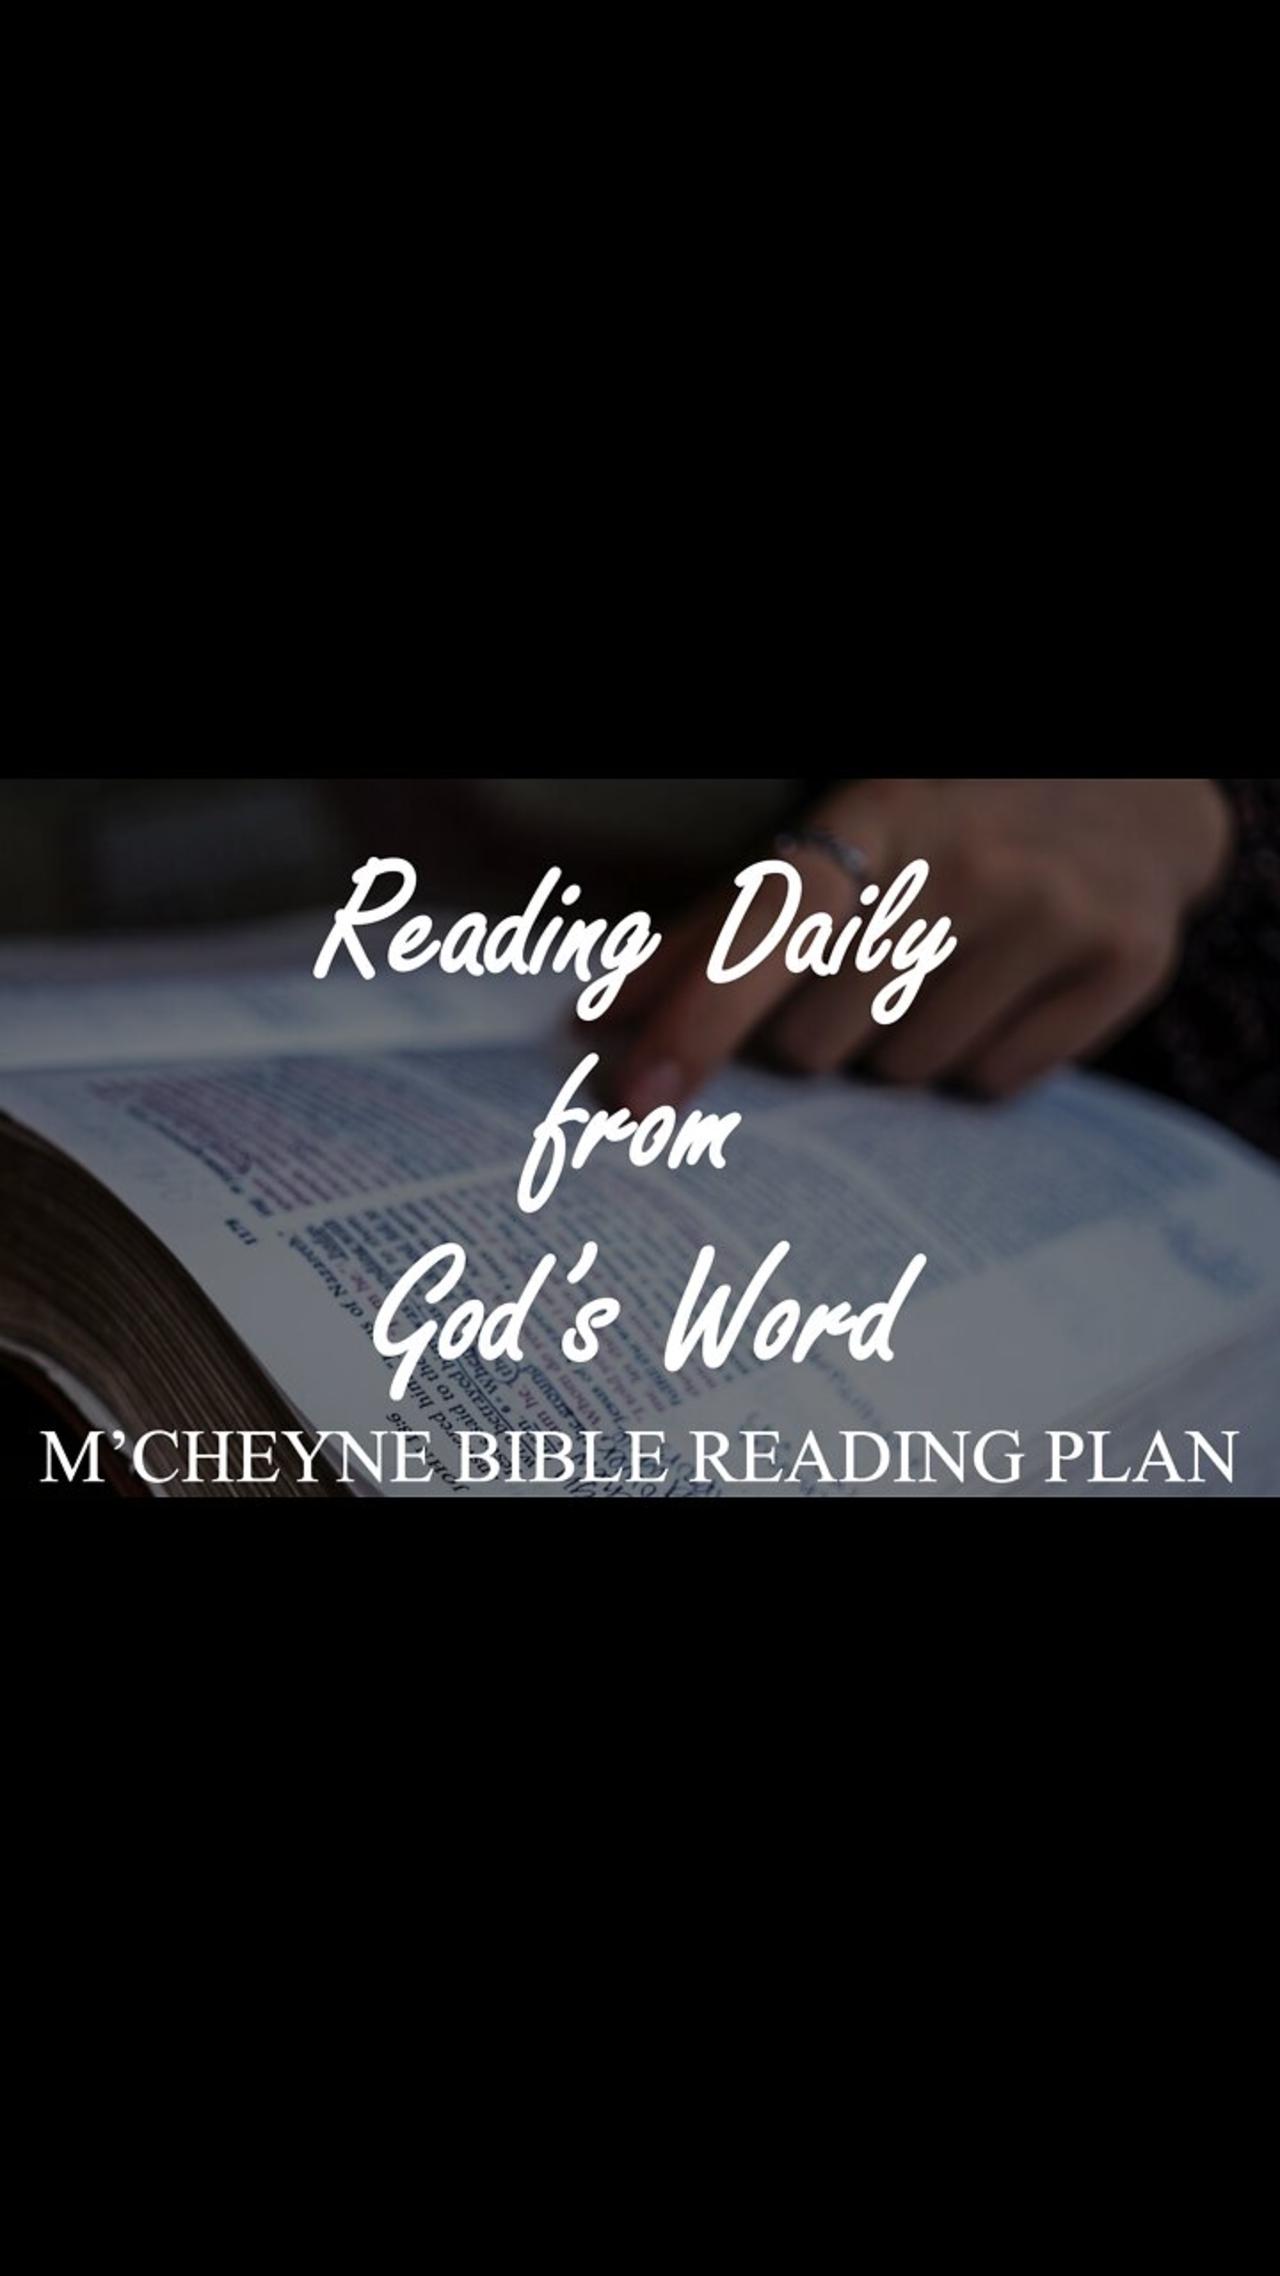 M’CHEYNE BIBLE READING PLAN - August 30